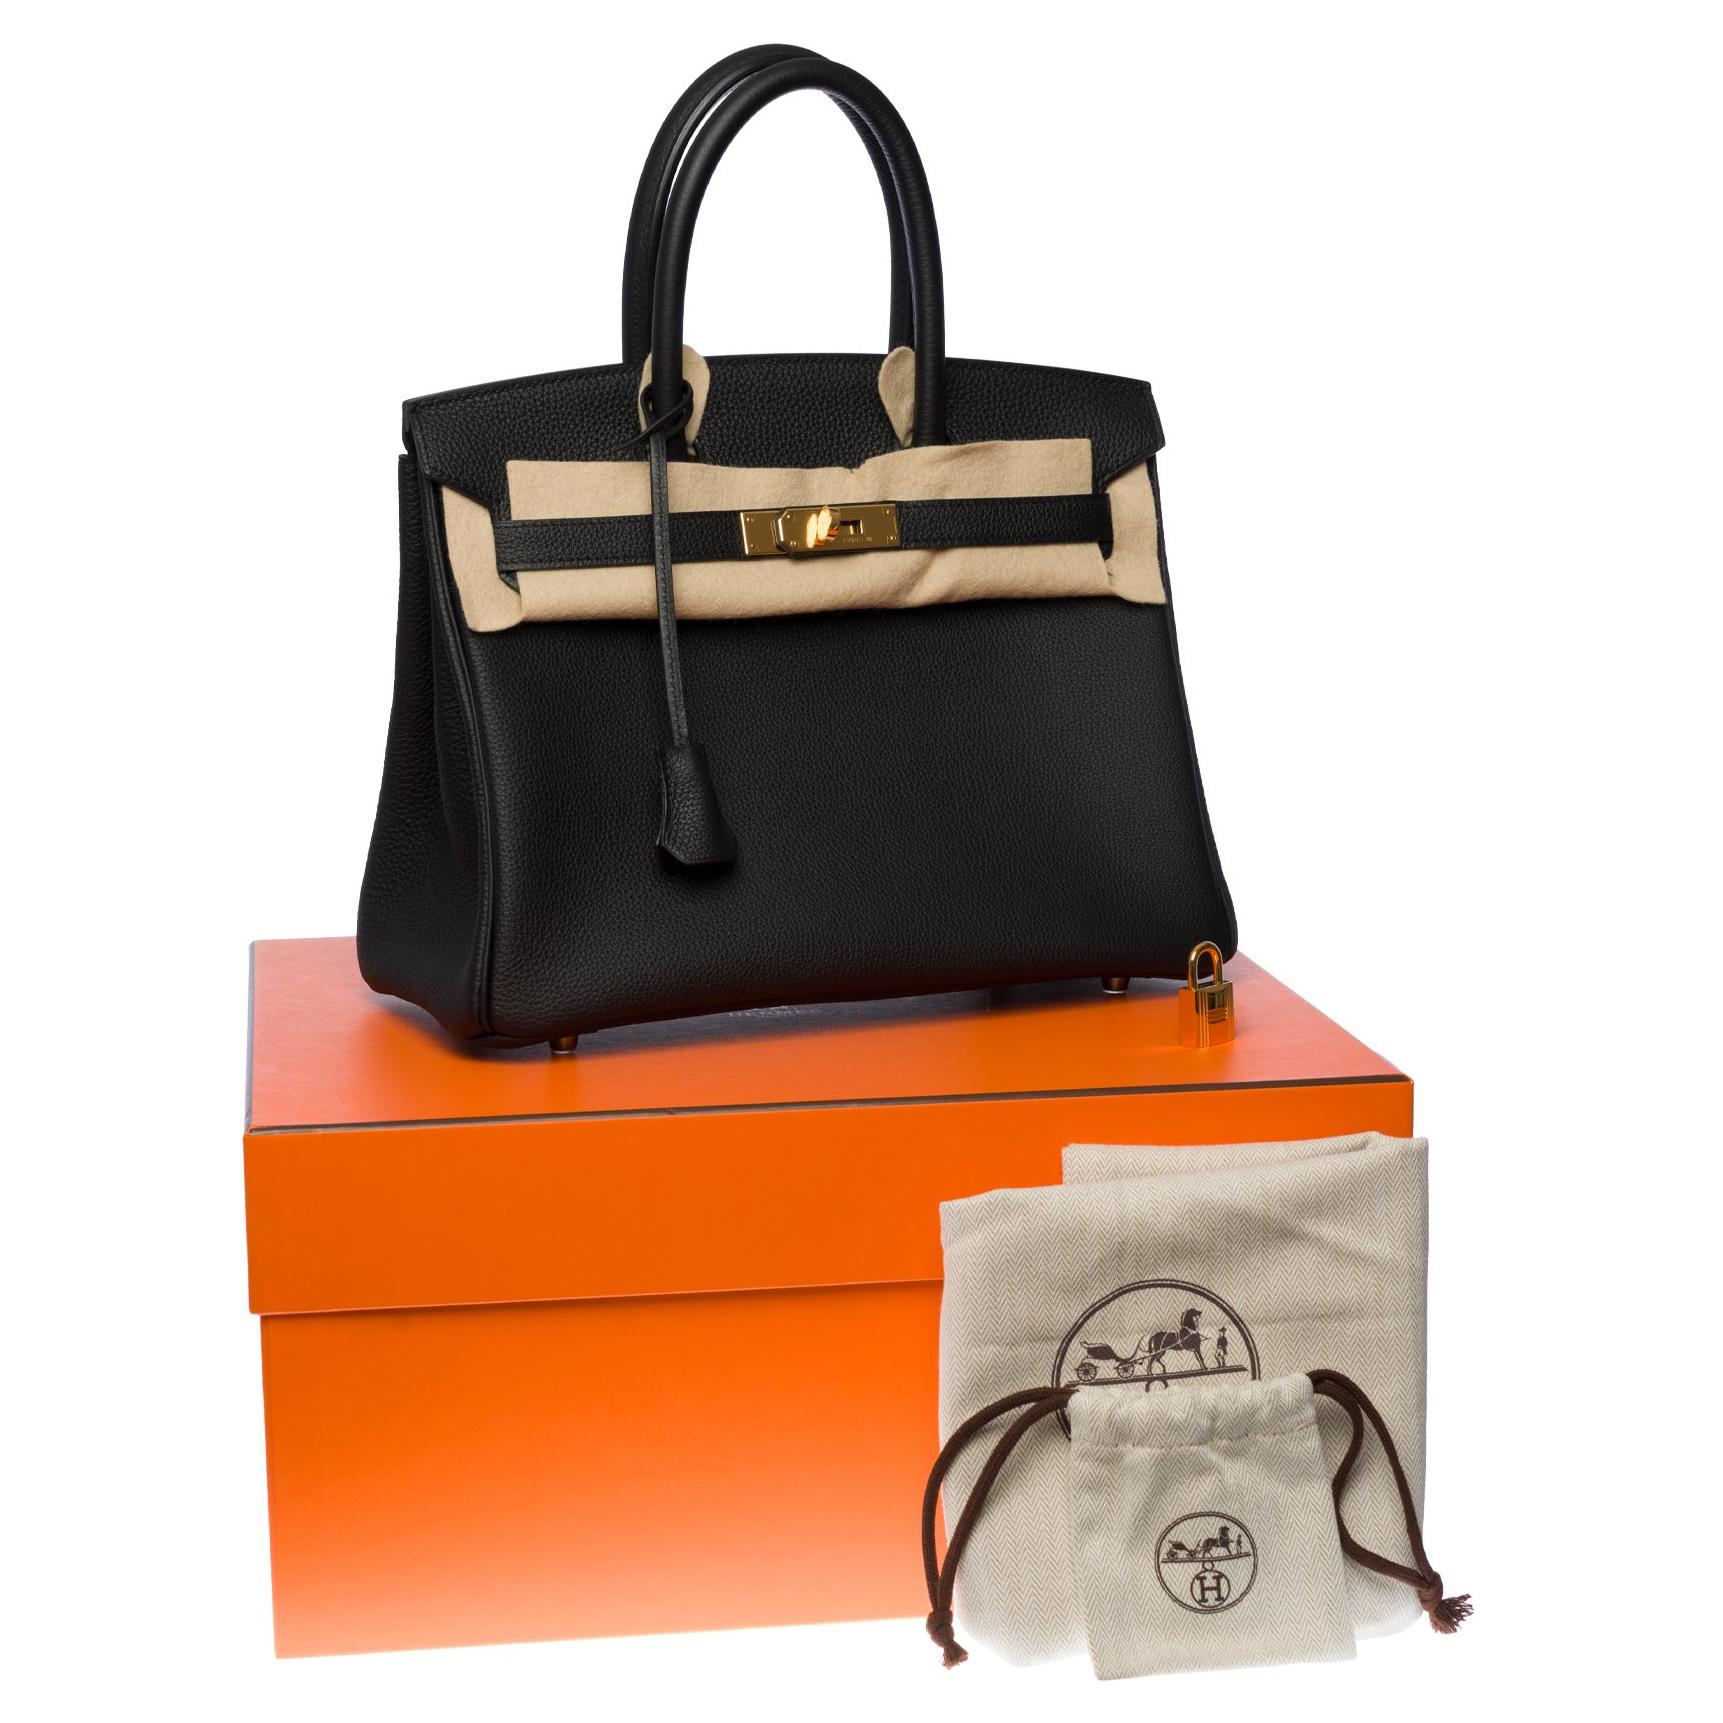 https://a.1stdibscdn.com/brand-new-hermes-birkin-30-handbag-in-black-togo-leather-gold-hardware-for-sale/1121189/v_128291821626797140557/12829182_master.jpg